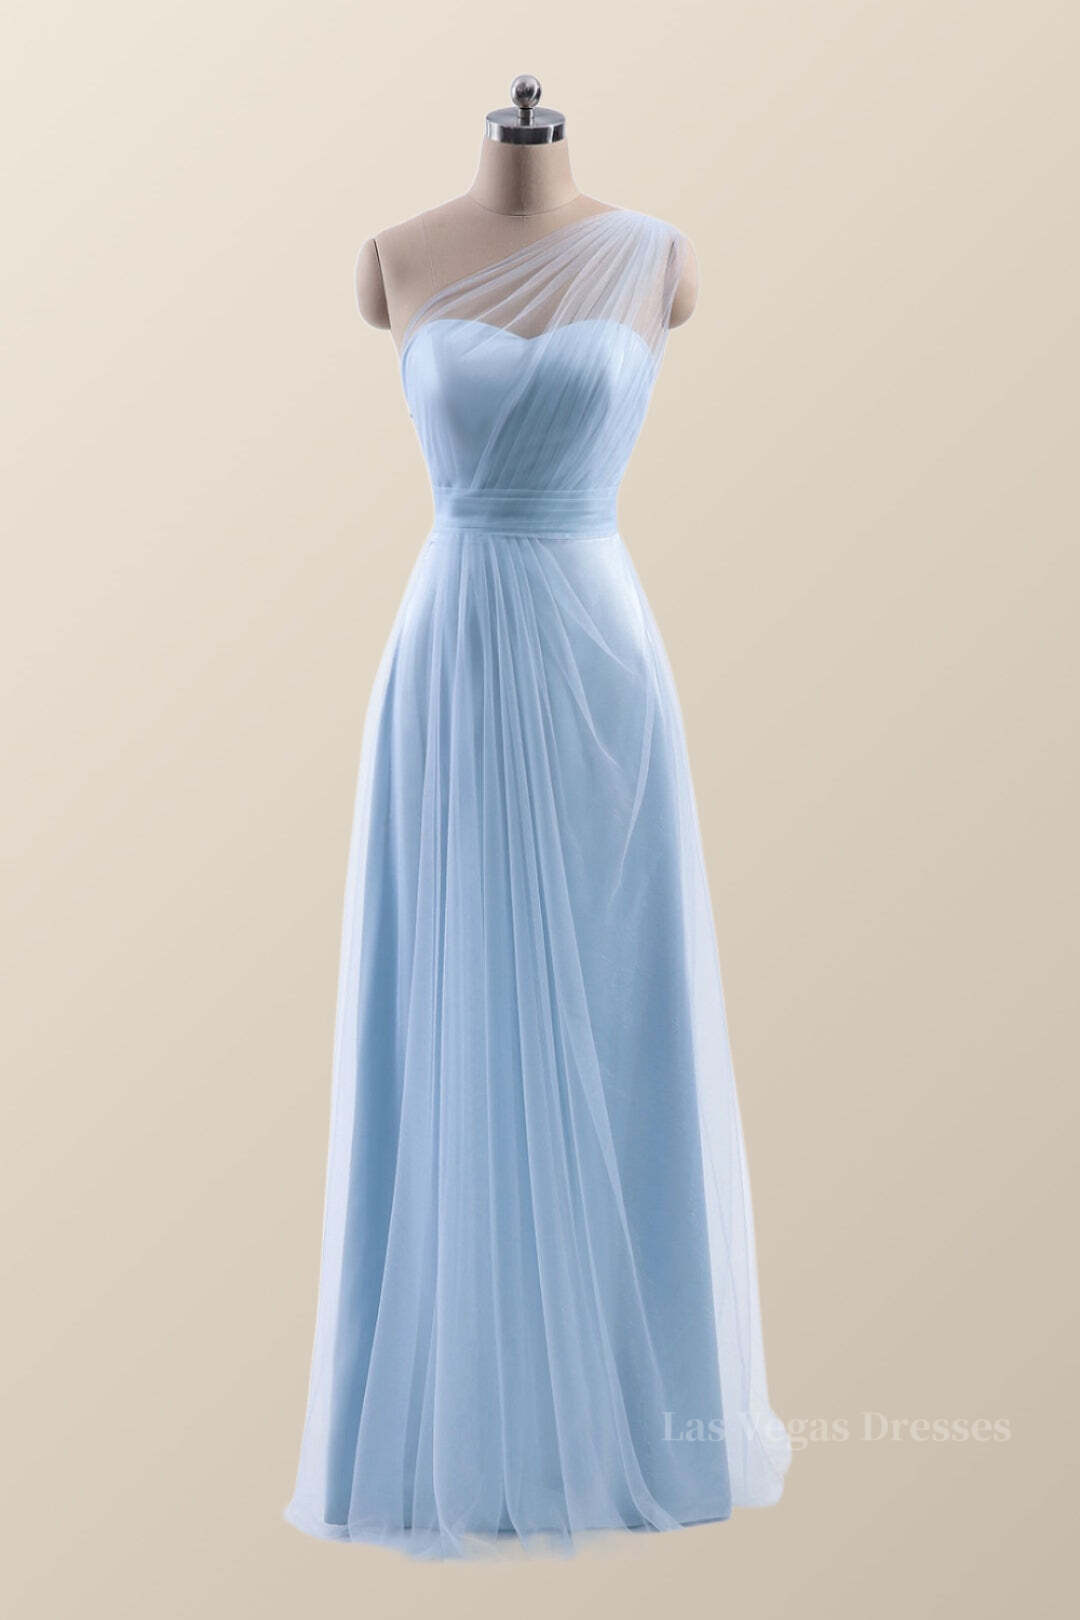 One Shoulder Light Blue Tulle A-line Bridesmaid Dress